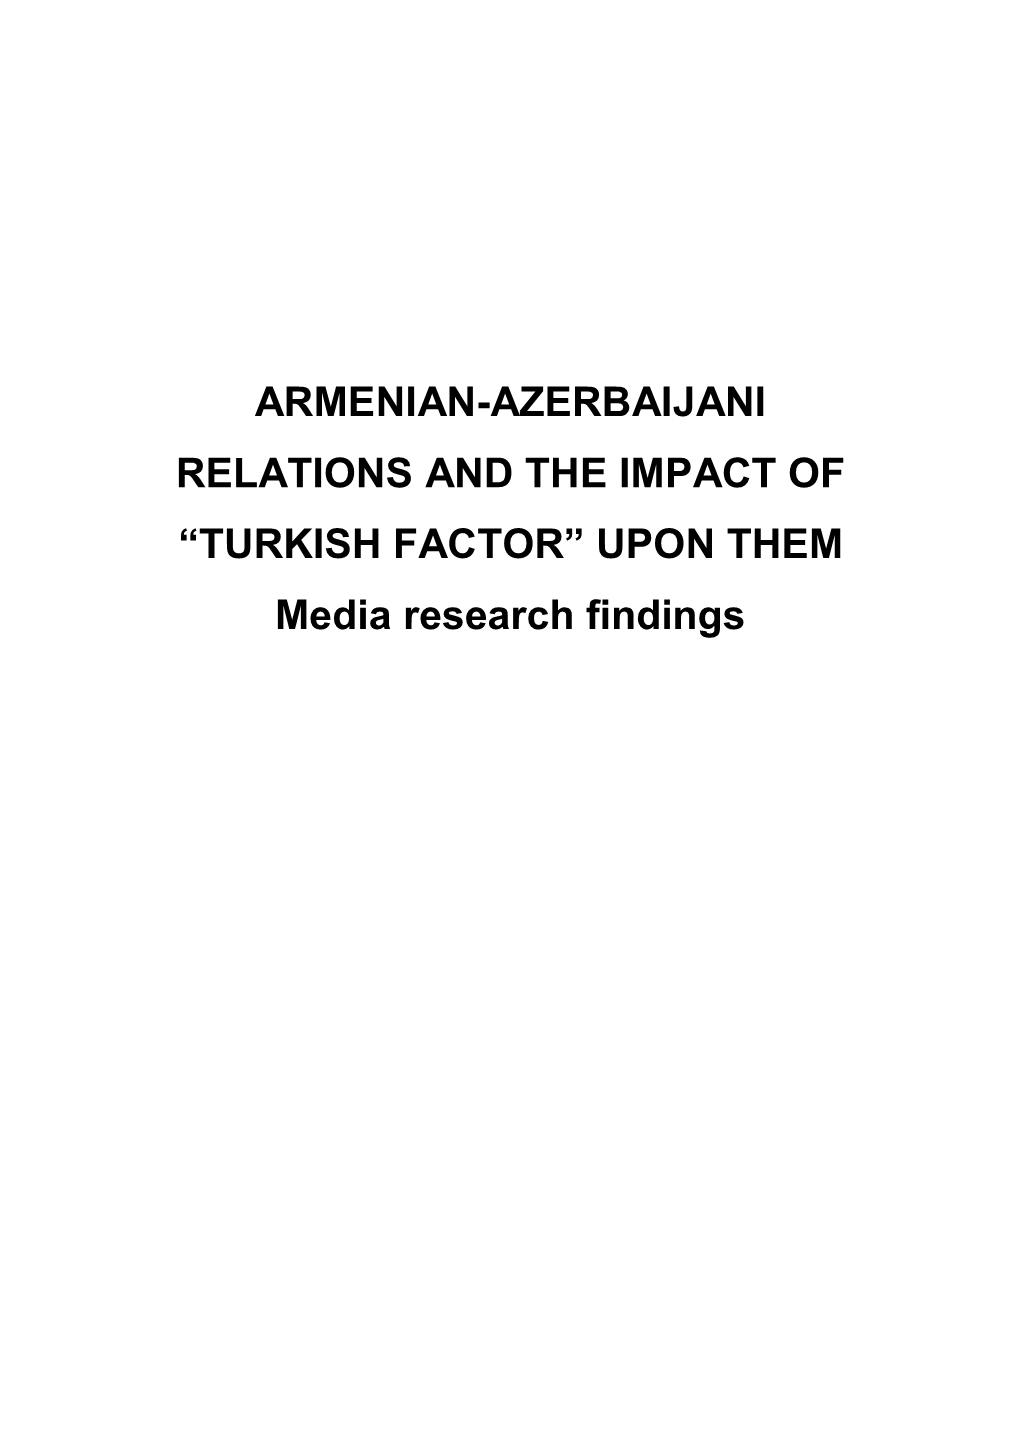 Armenian-Azerbaijani Relations and the Impact of “Turkish Factor” Upon Them